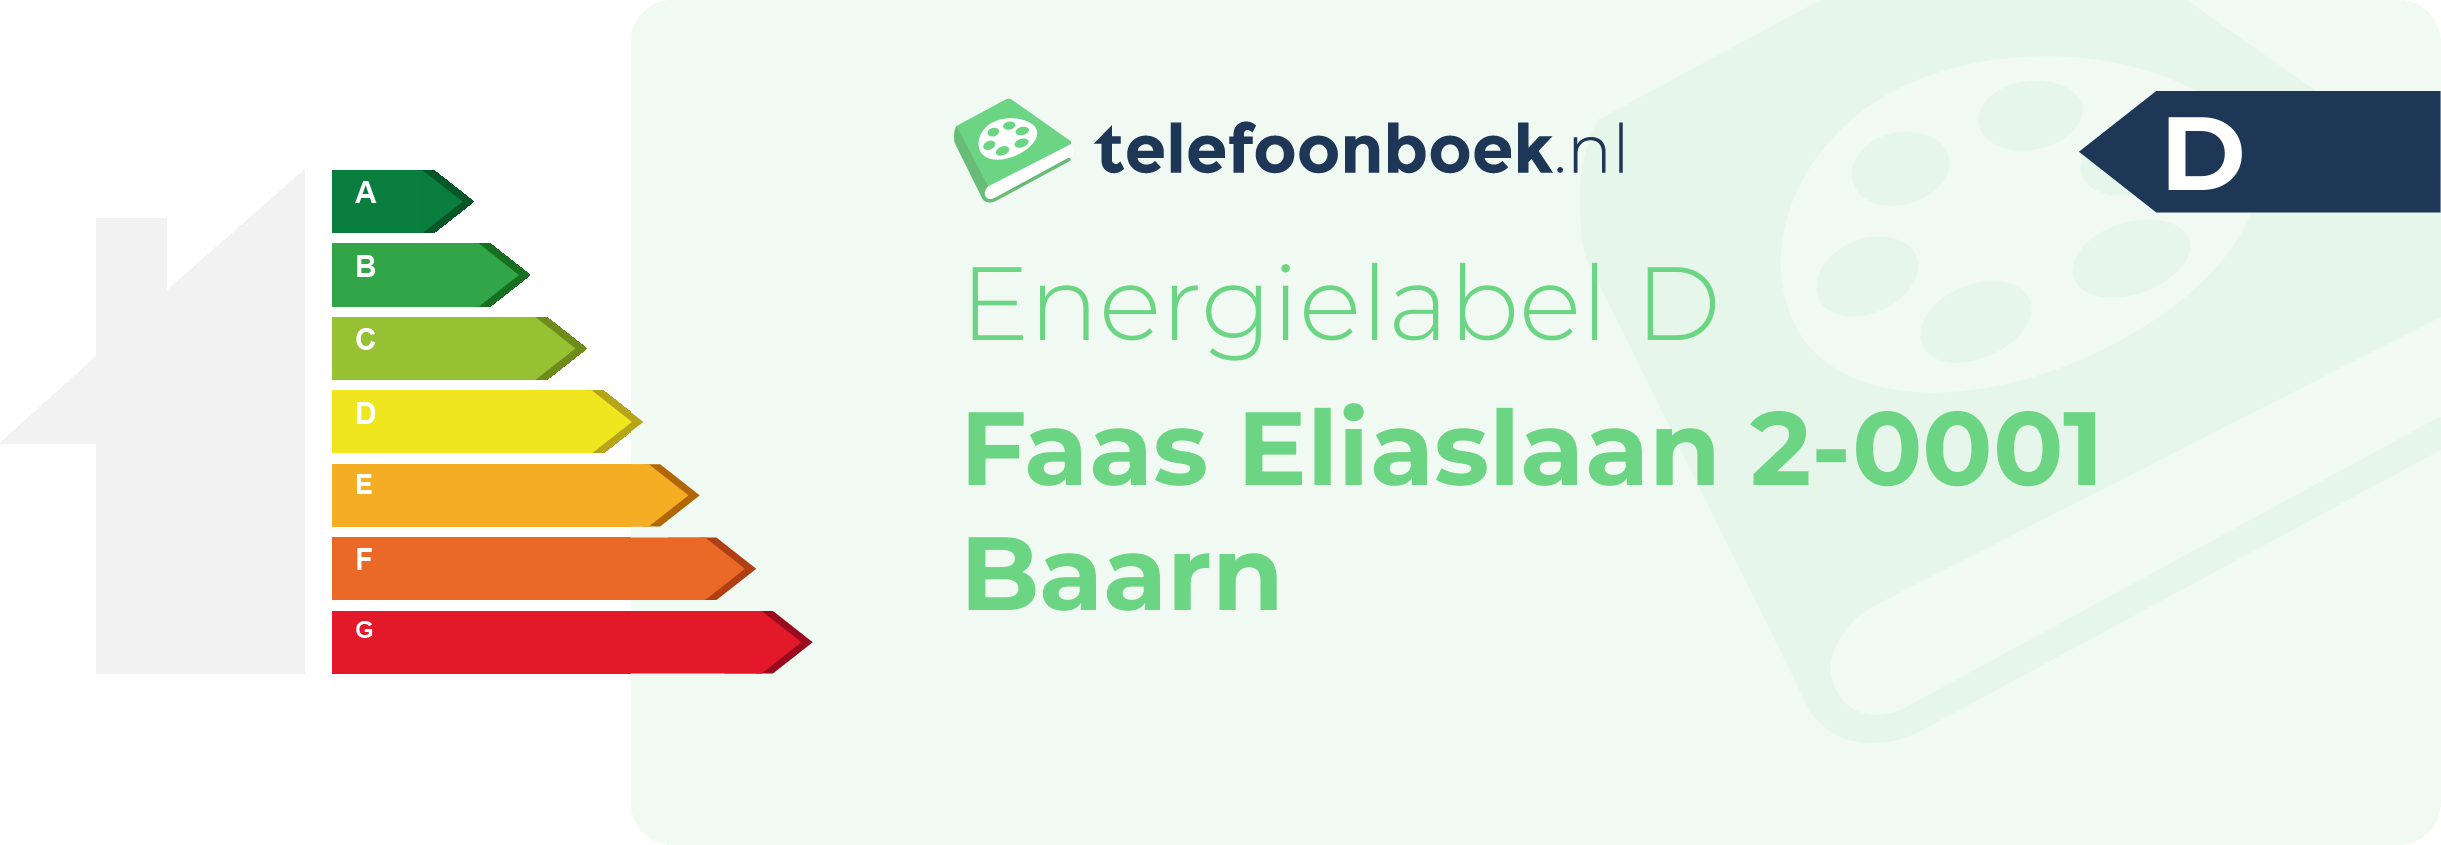 Energielabel Faas Eliaslaan 2-0001 Baarn